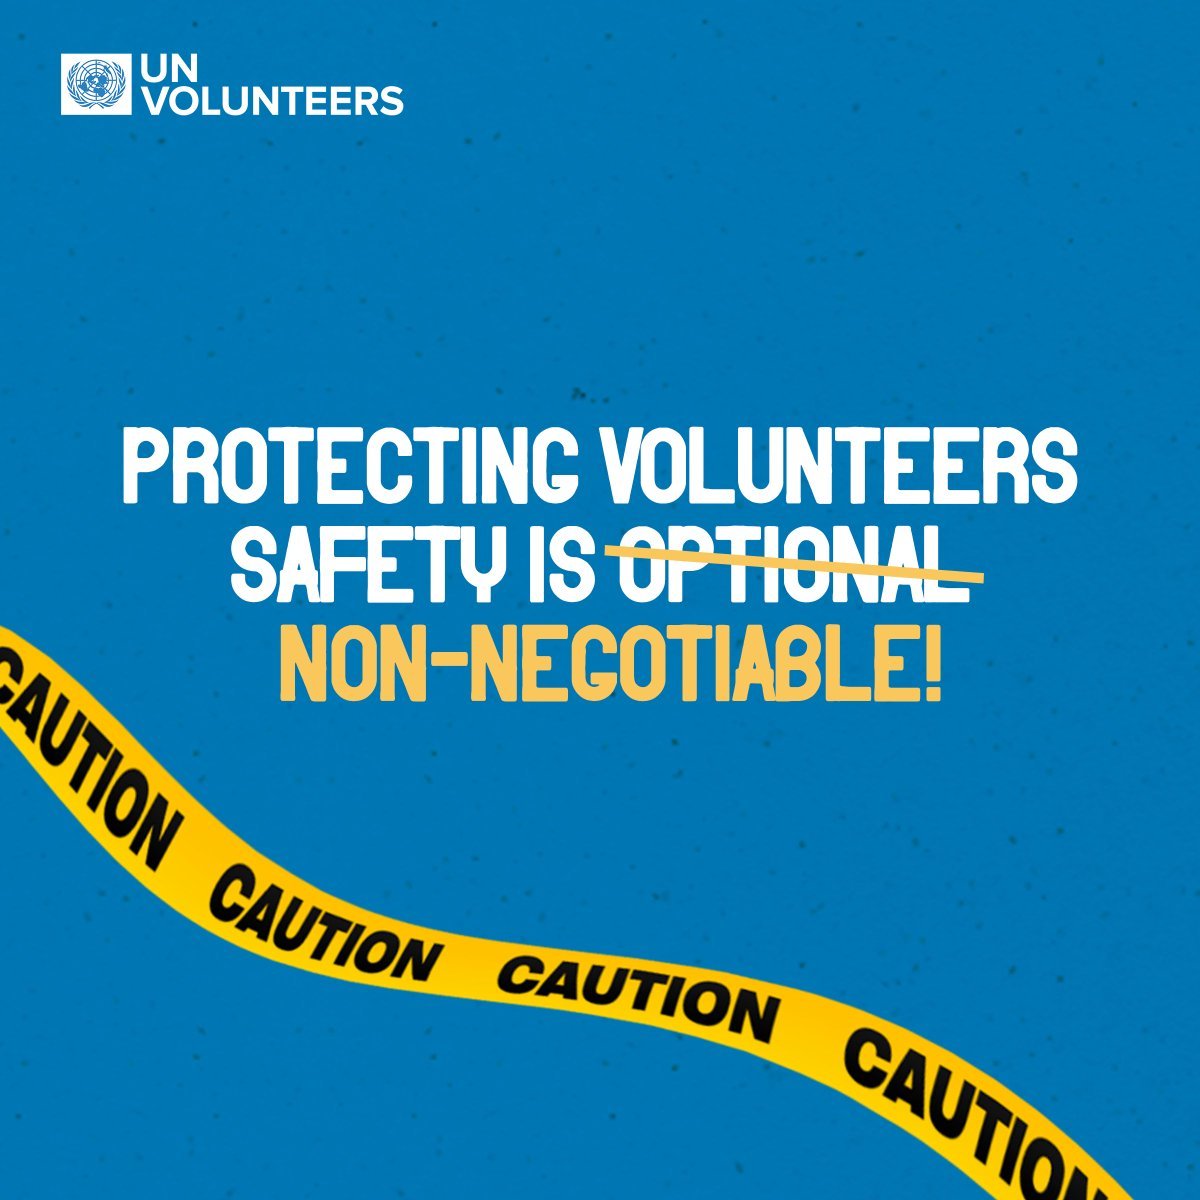 Volunteers, stay safe! #SafeDay